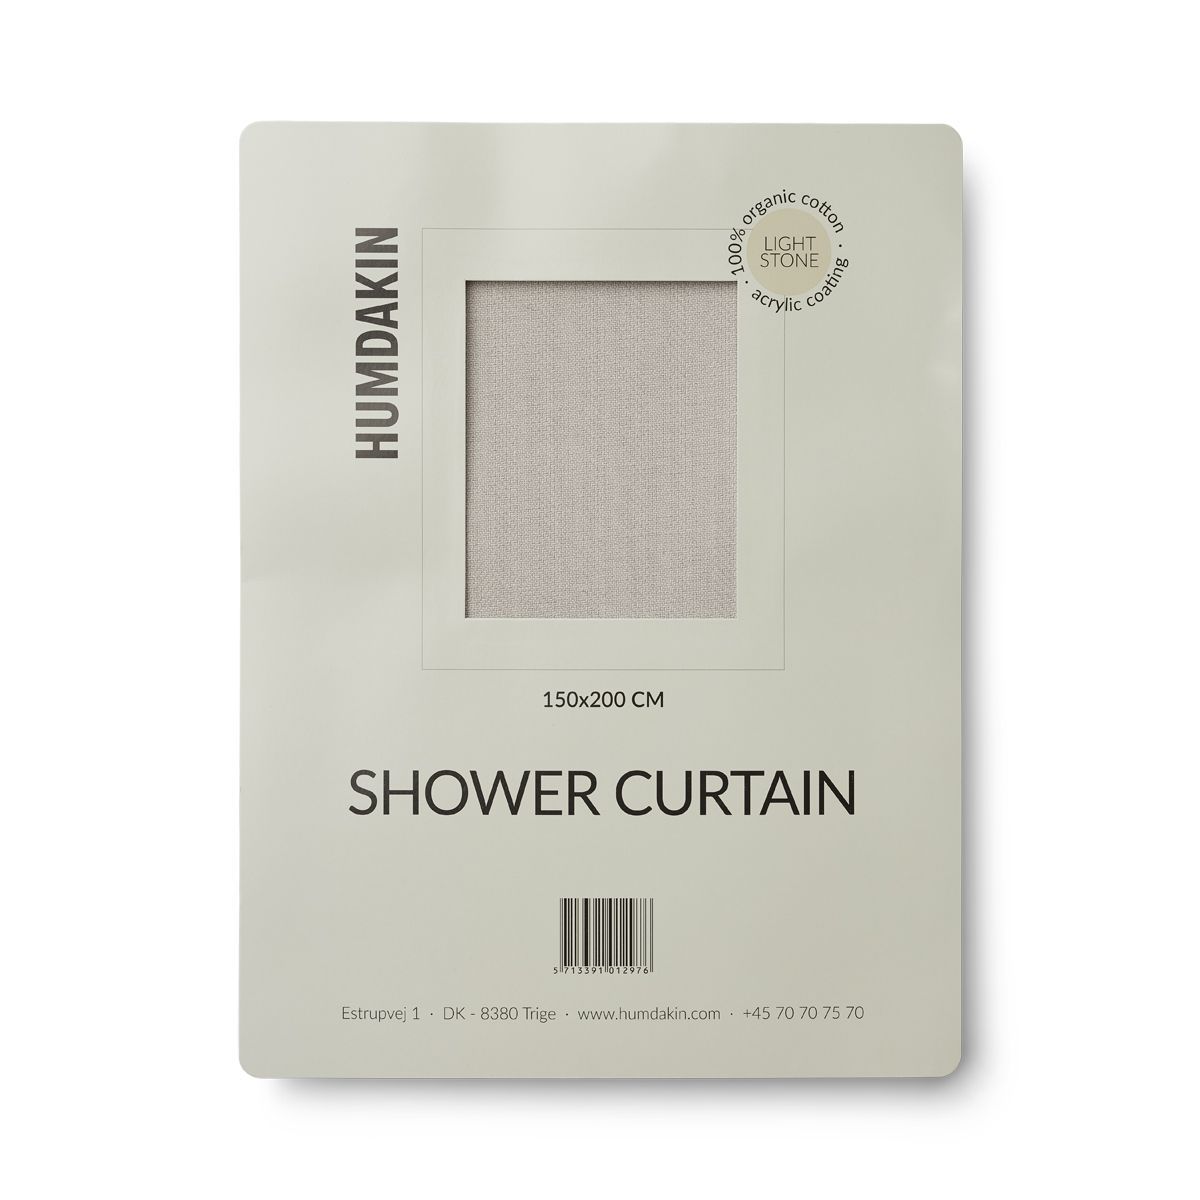 Humdakin Shower Curtain Made Of Organic Cotton, Light Stone